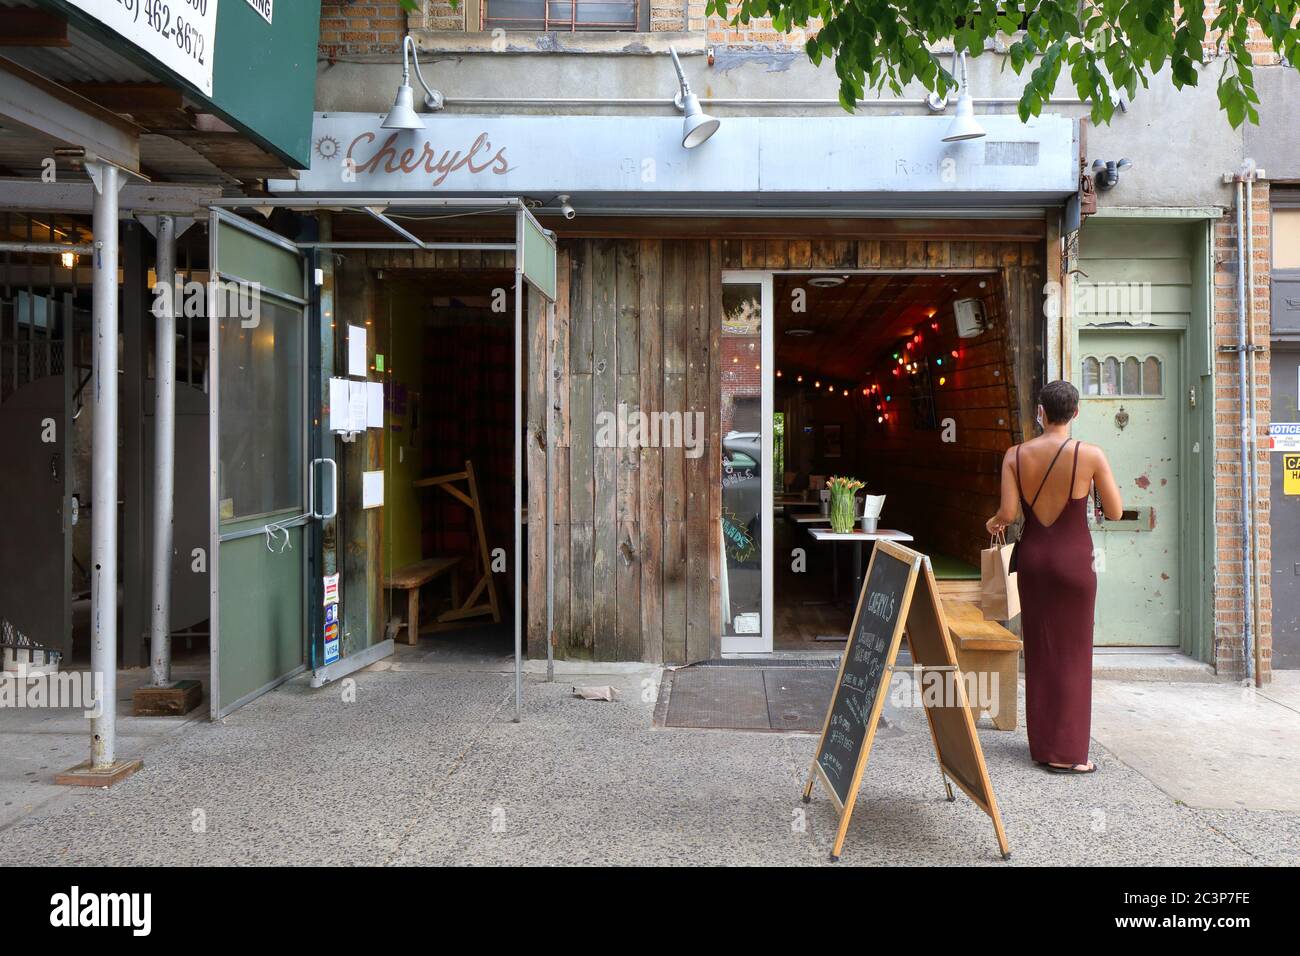 Cheryl's Global Soul, 236 Underhill Ave, Brooklyn, NYC Foto von einem Soul Food Restaurant im Viertel Prospect Heights. Stockfoto